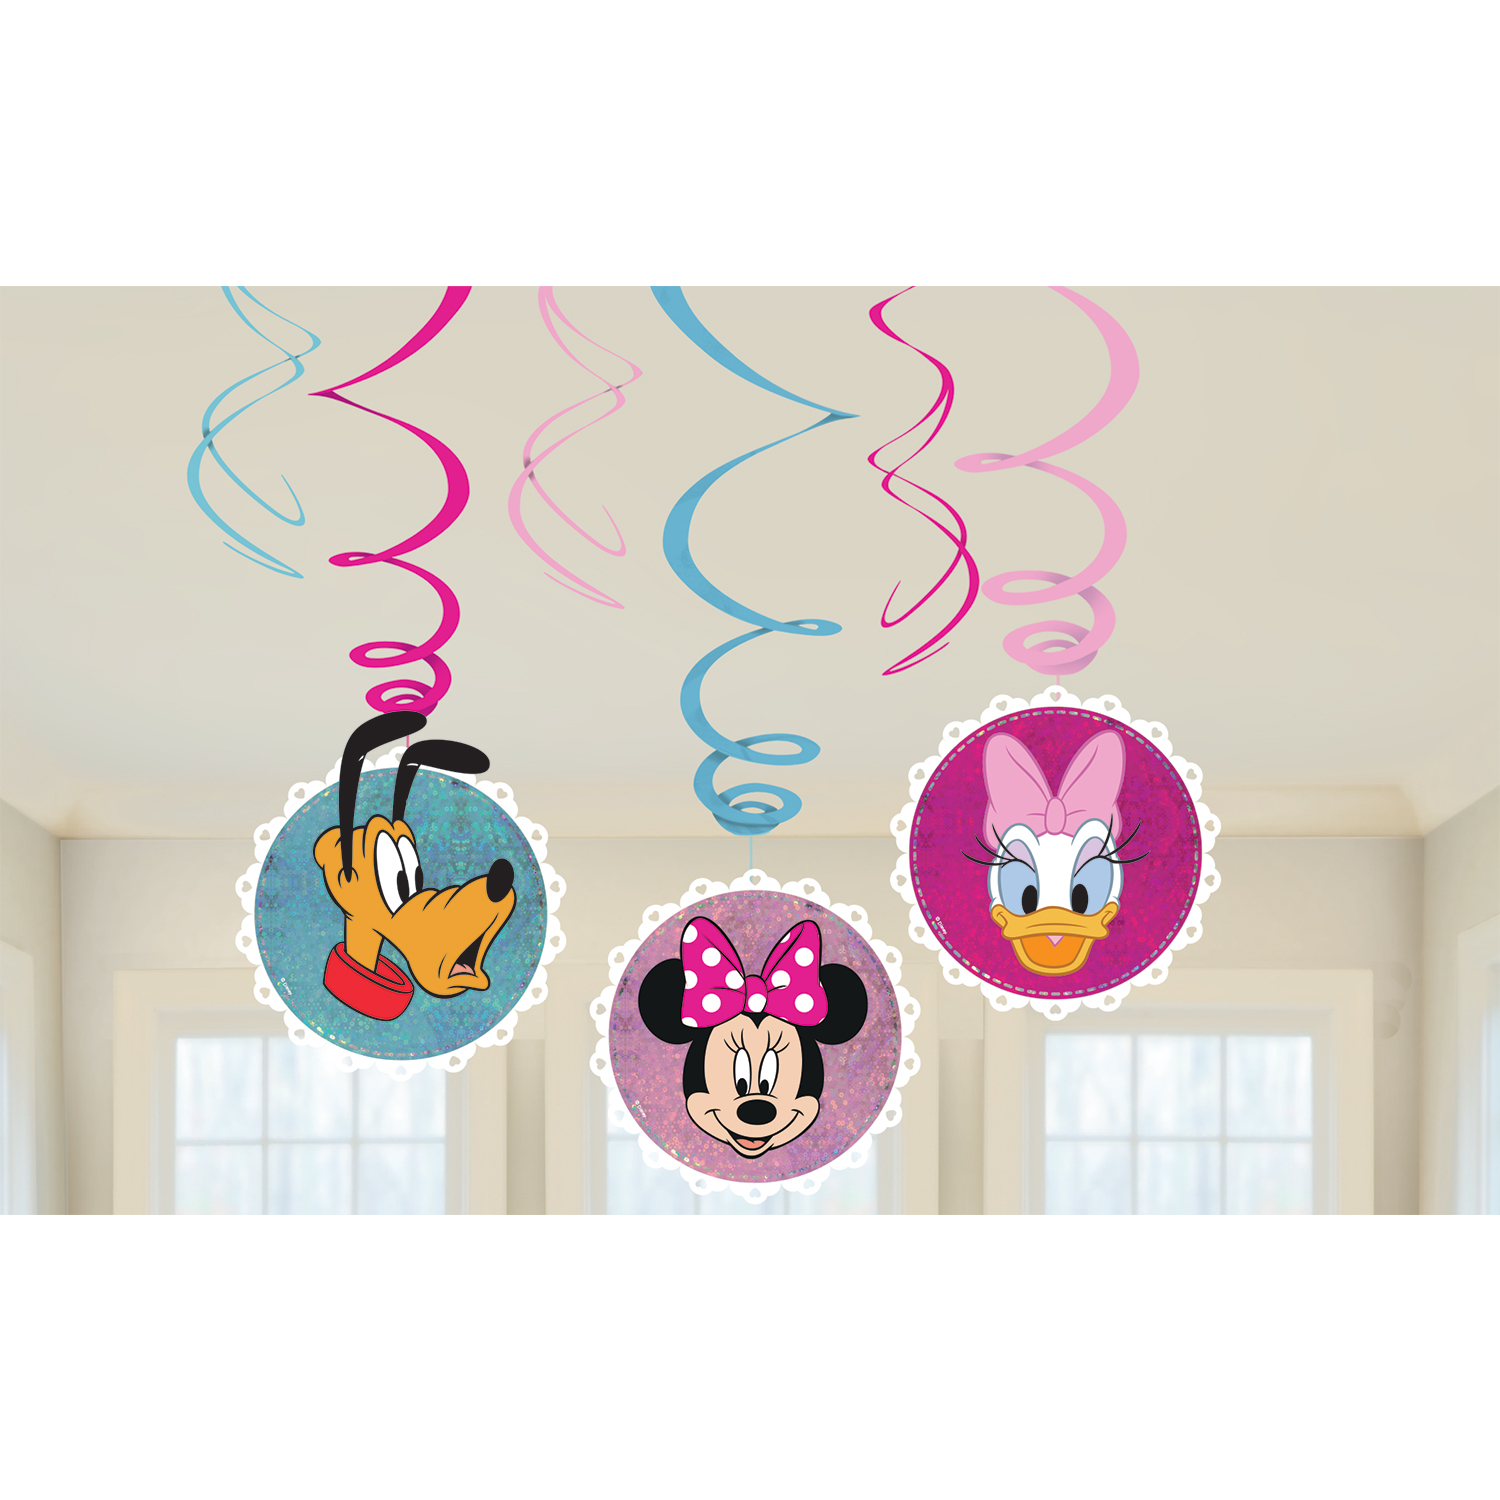 Banniere Joyeux Anniversaire Minnie 2 2 M Disney Cuisine Maison Loisirs Creatifs